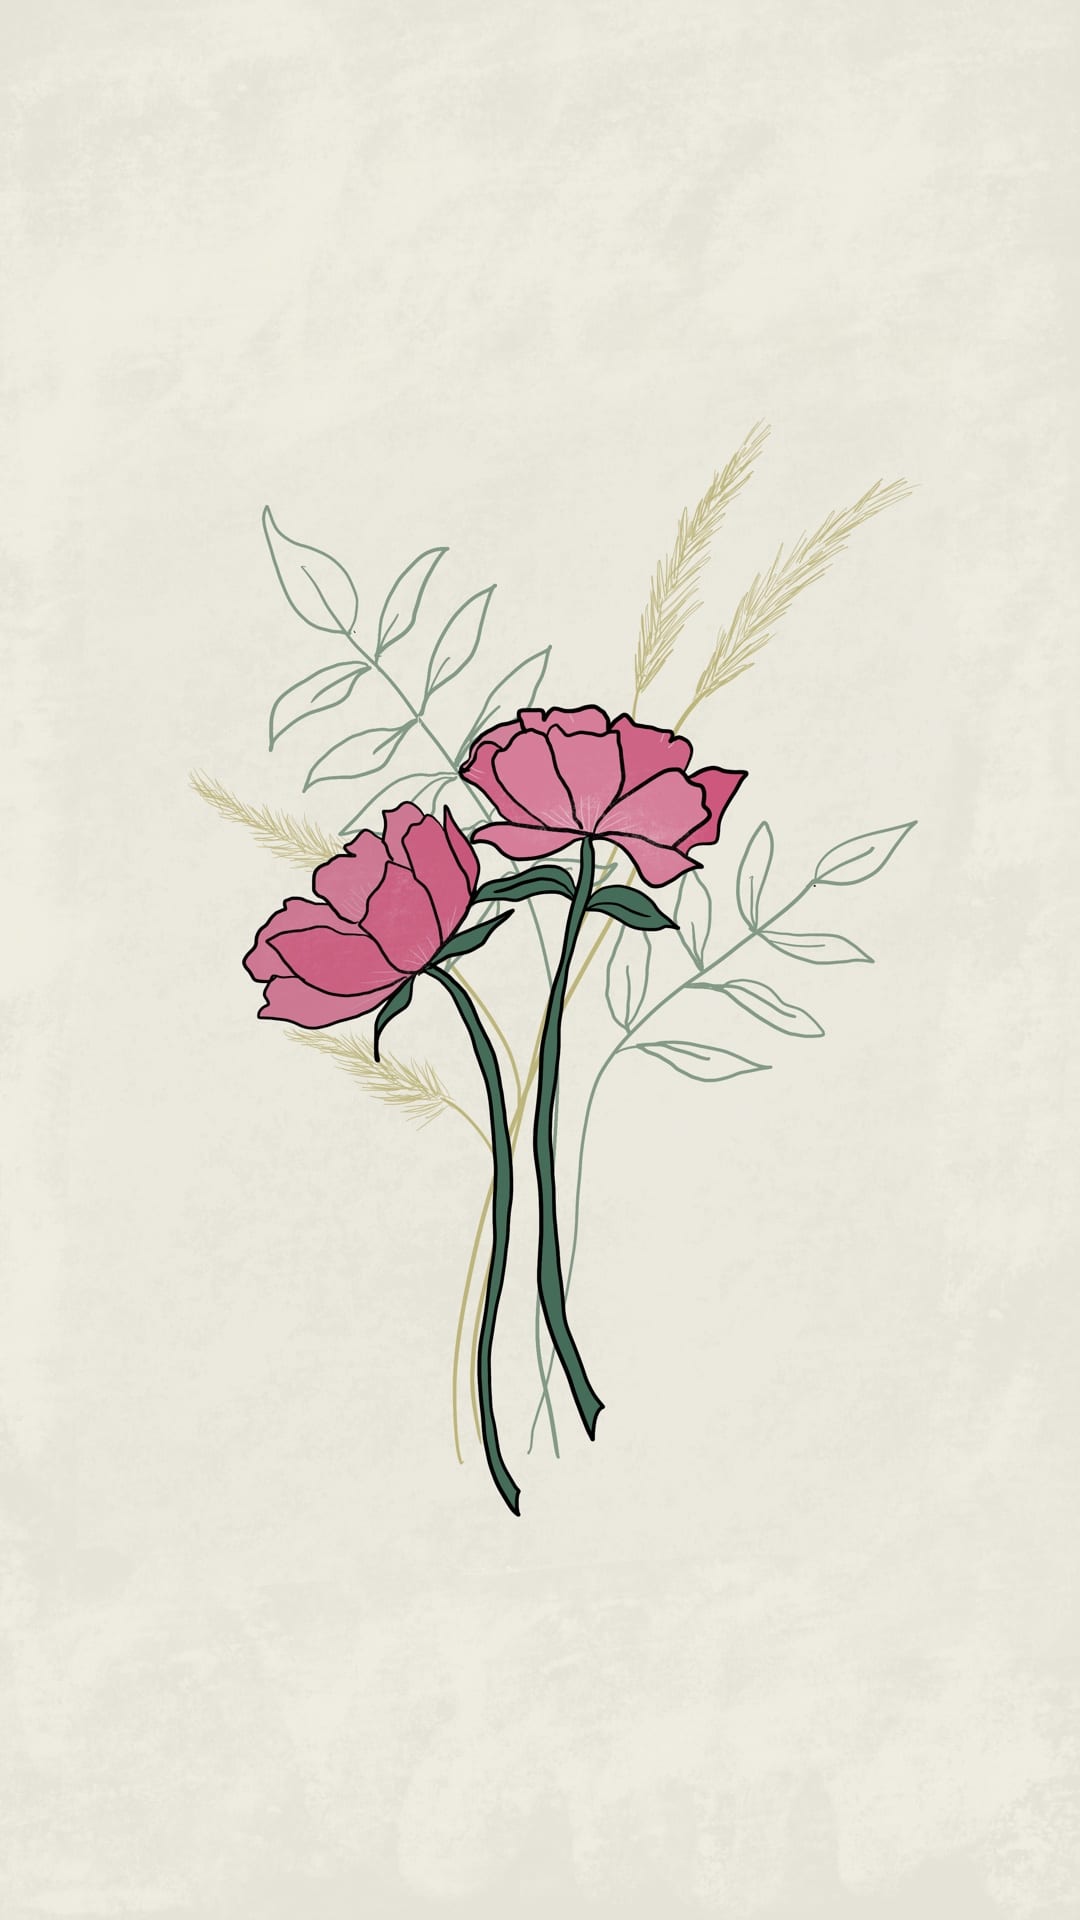 Phone Background / Wallpaper Flower Arrangement by Wanda Lopez Designs